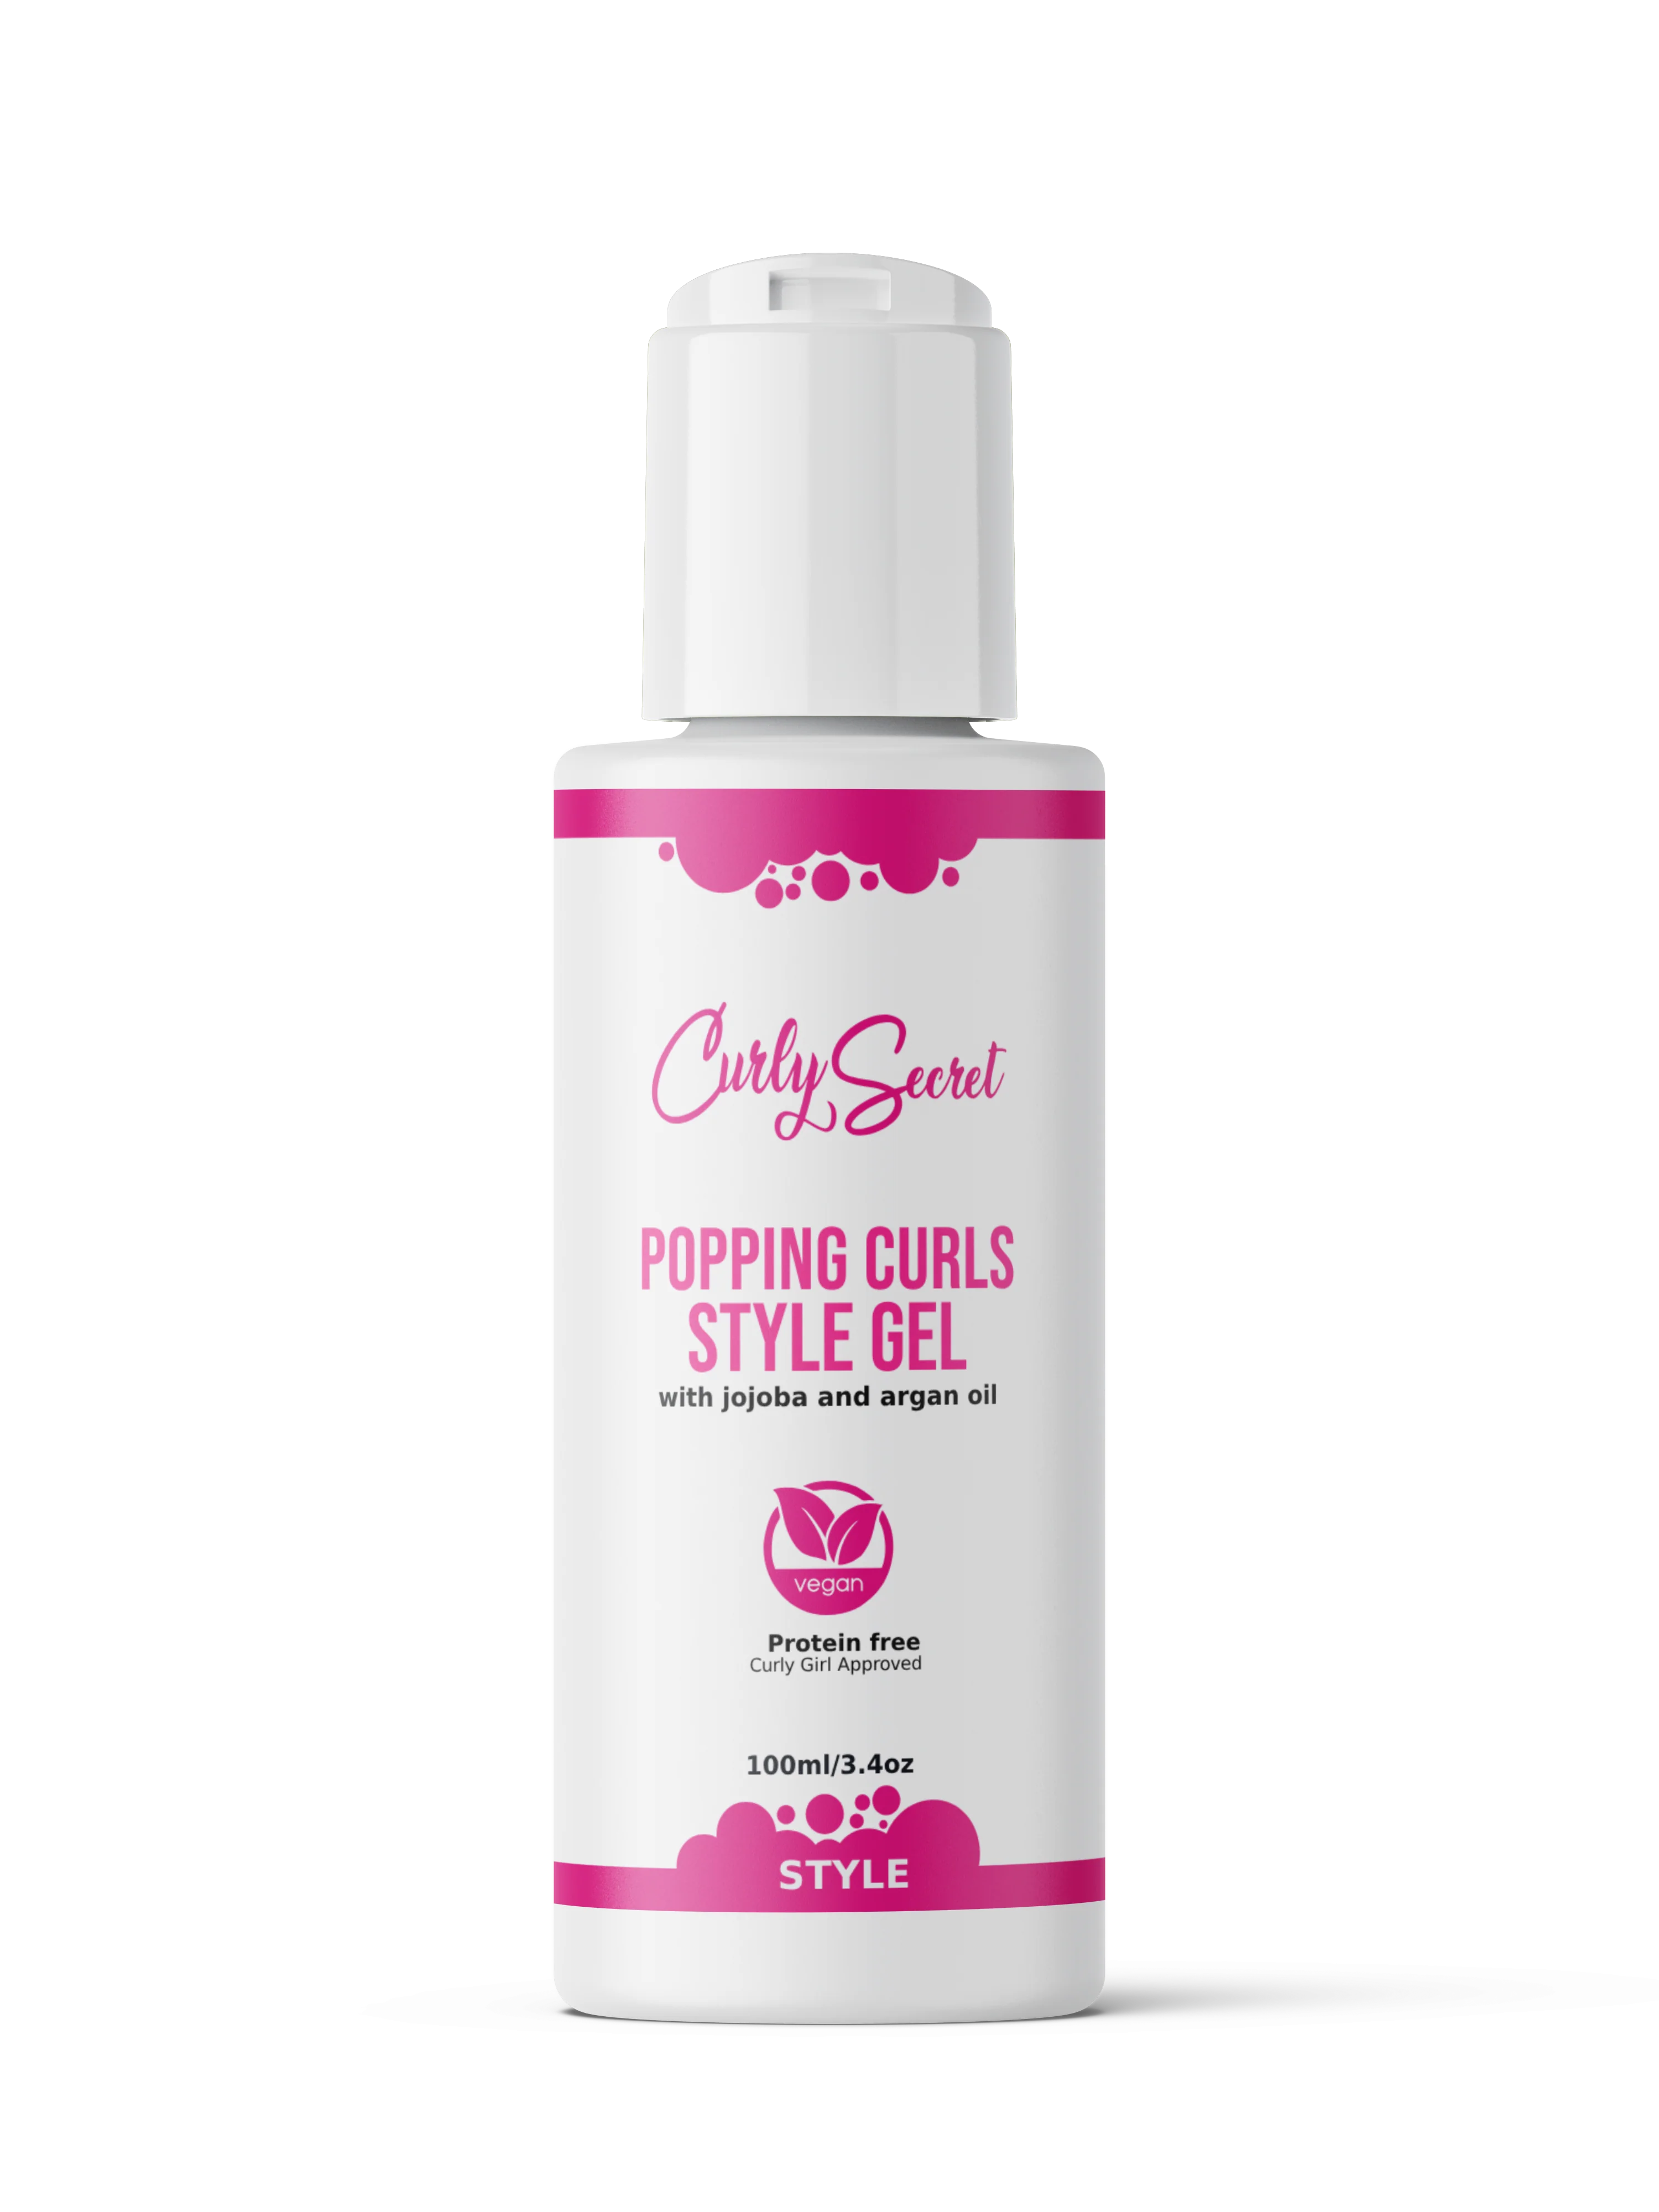 Curly Secret Popping Curls Styling Gel - Travel Size - 50  ml